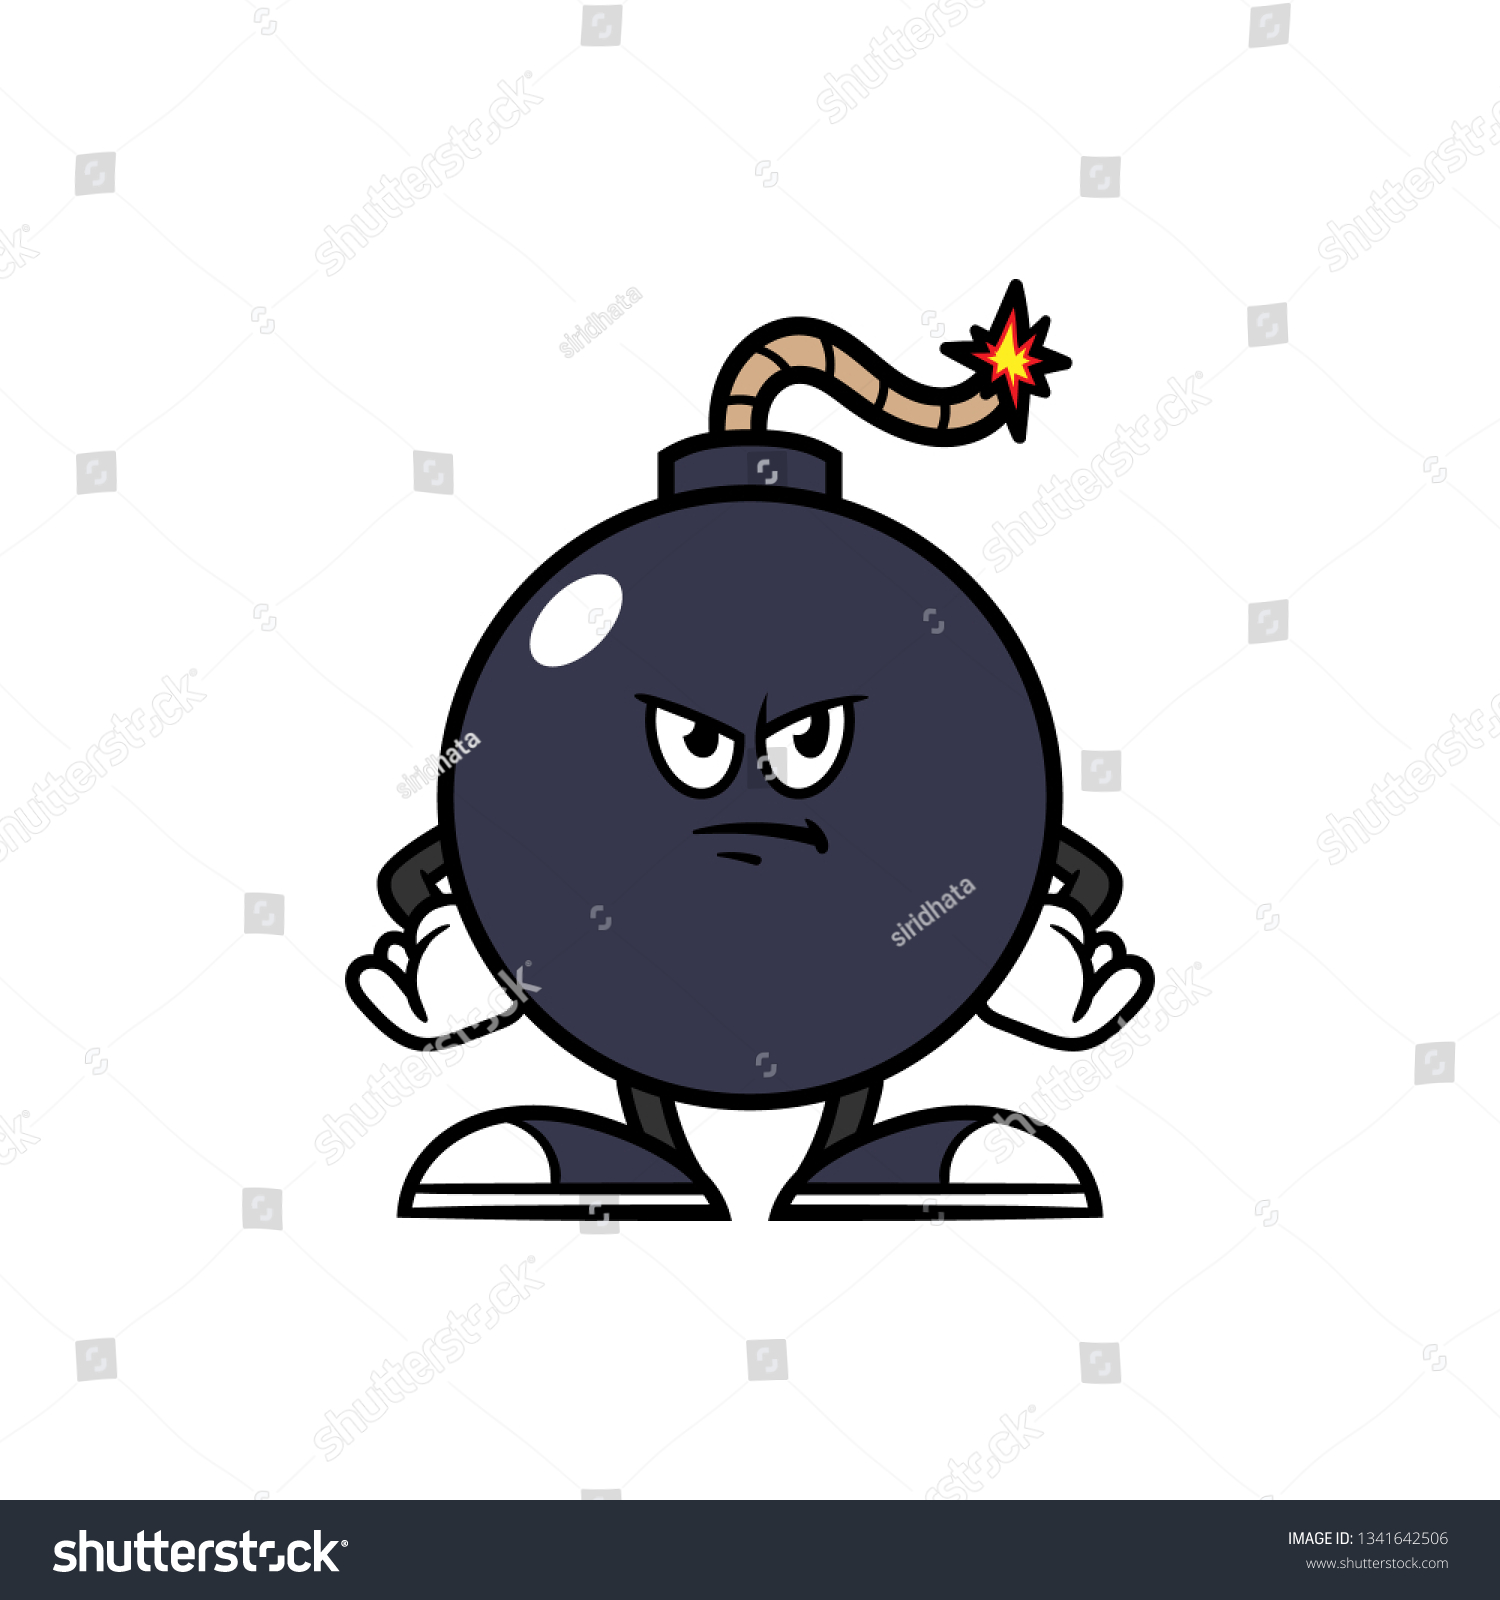 Cartoon Angry Bomb Character - Royalty Free Stock Vector 1341642506 ...